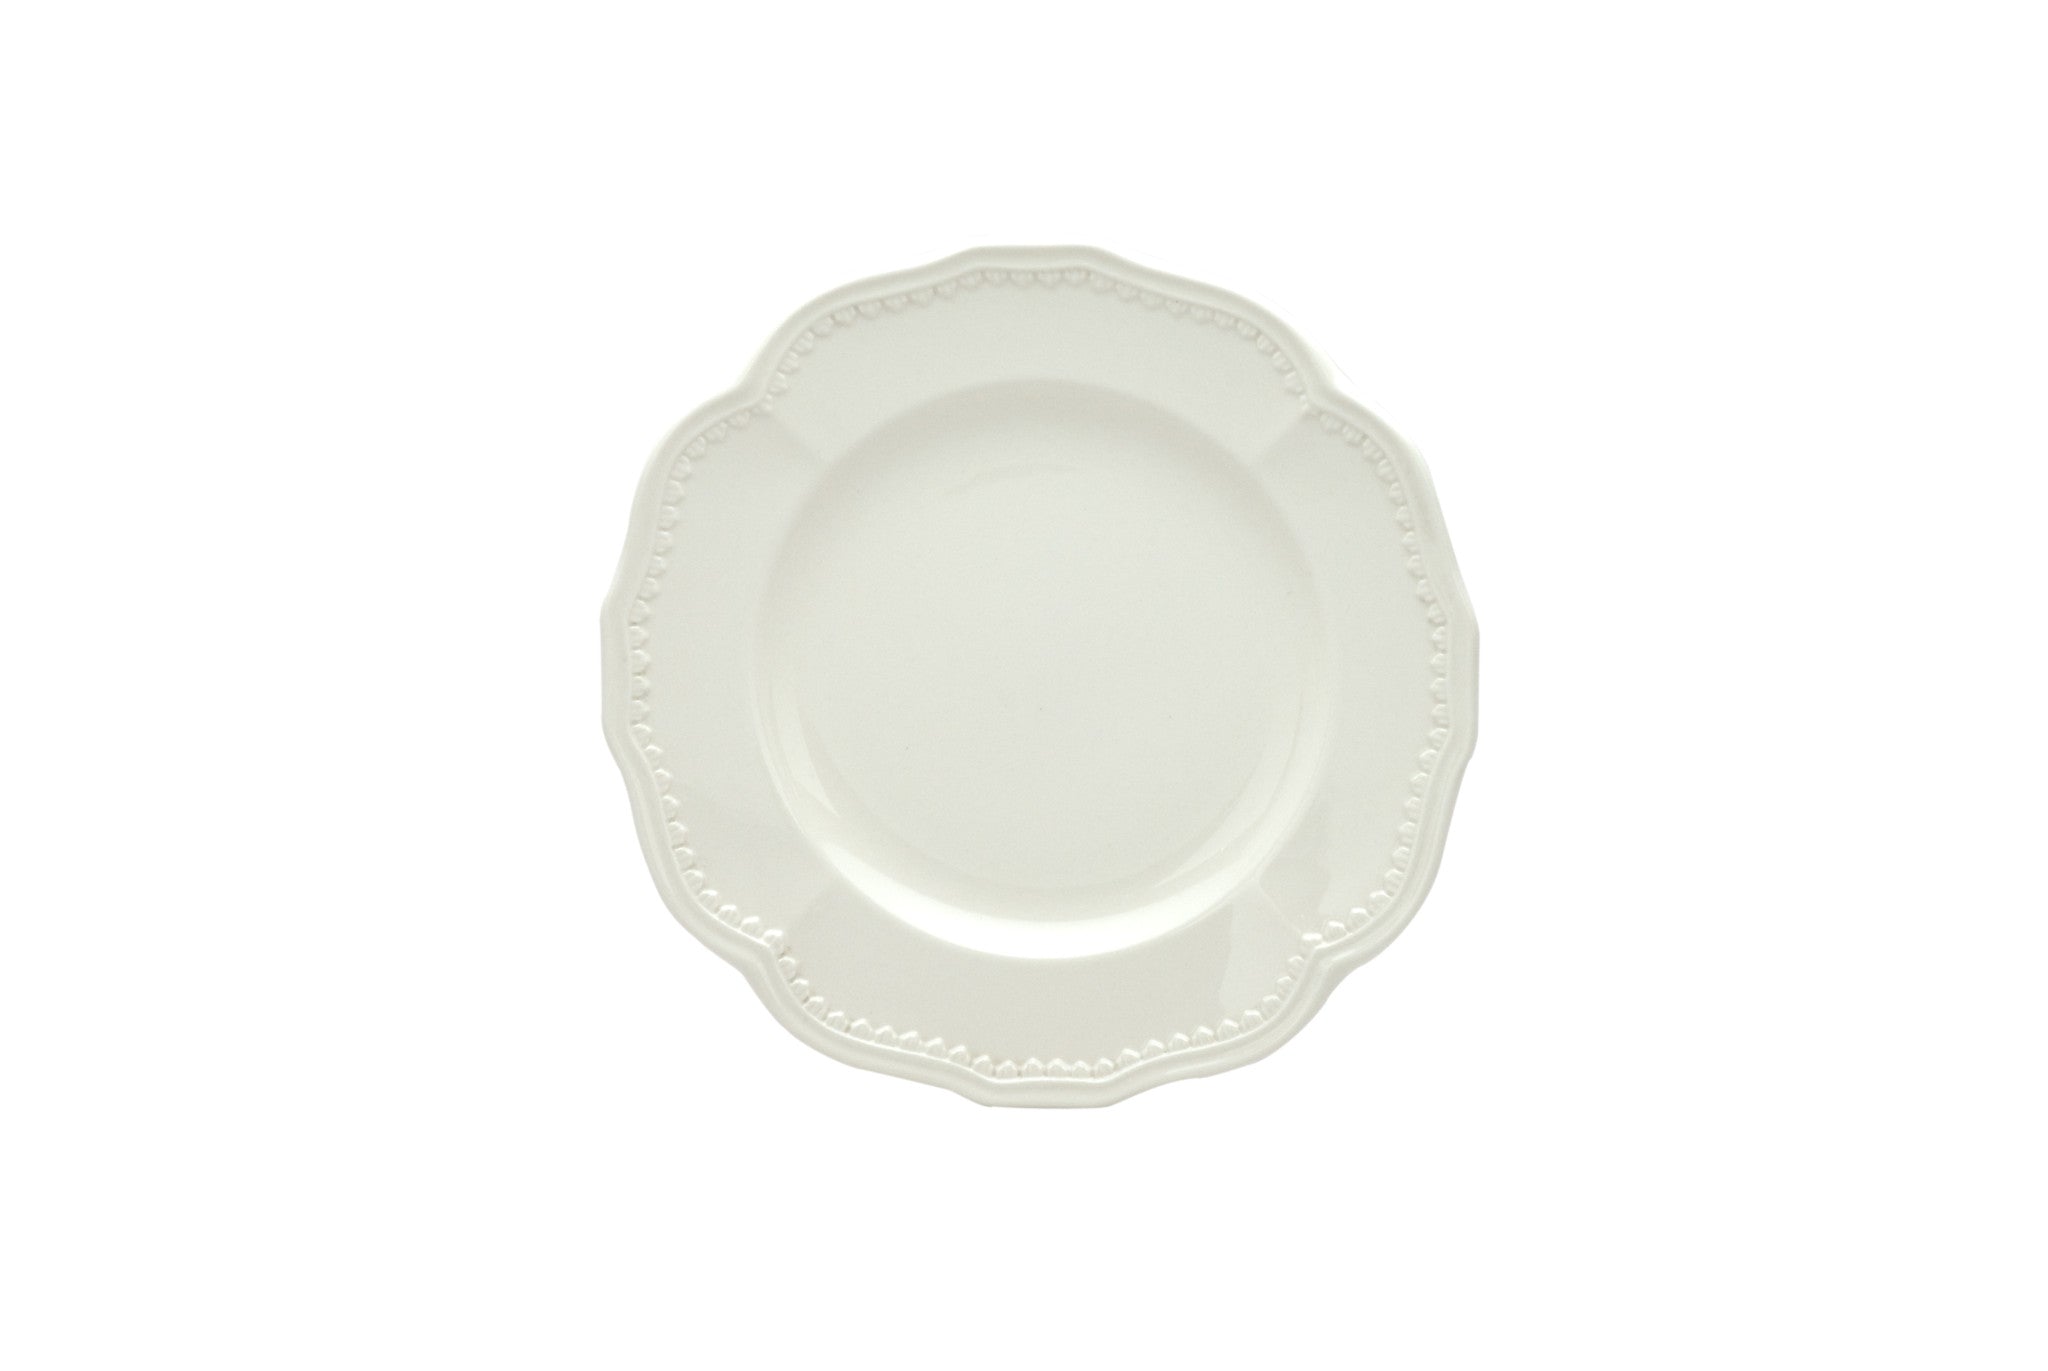 White Four Piece Round Scallop Stoneware Service For Four Salad Plate Set